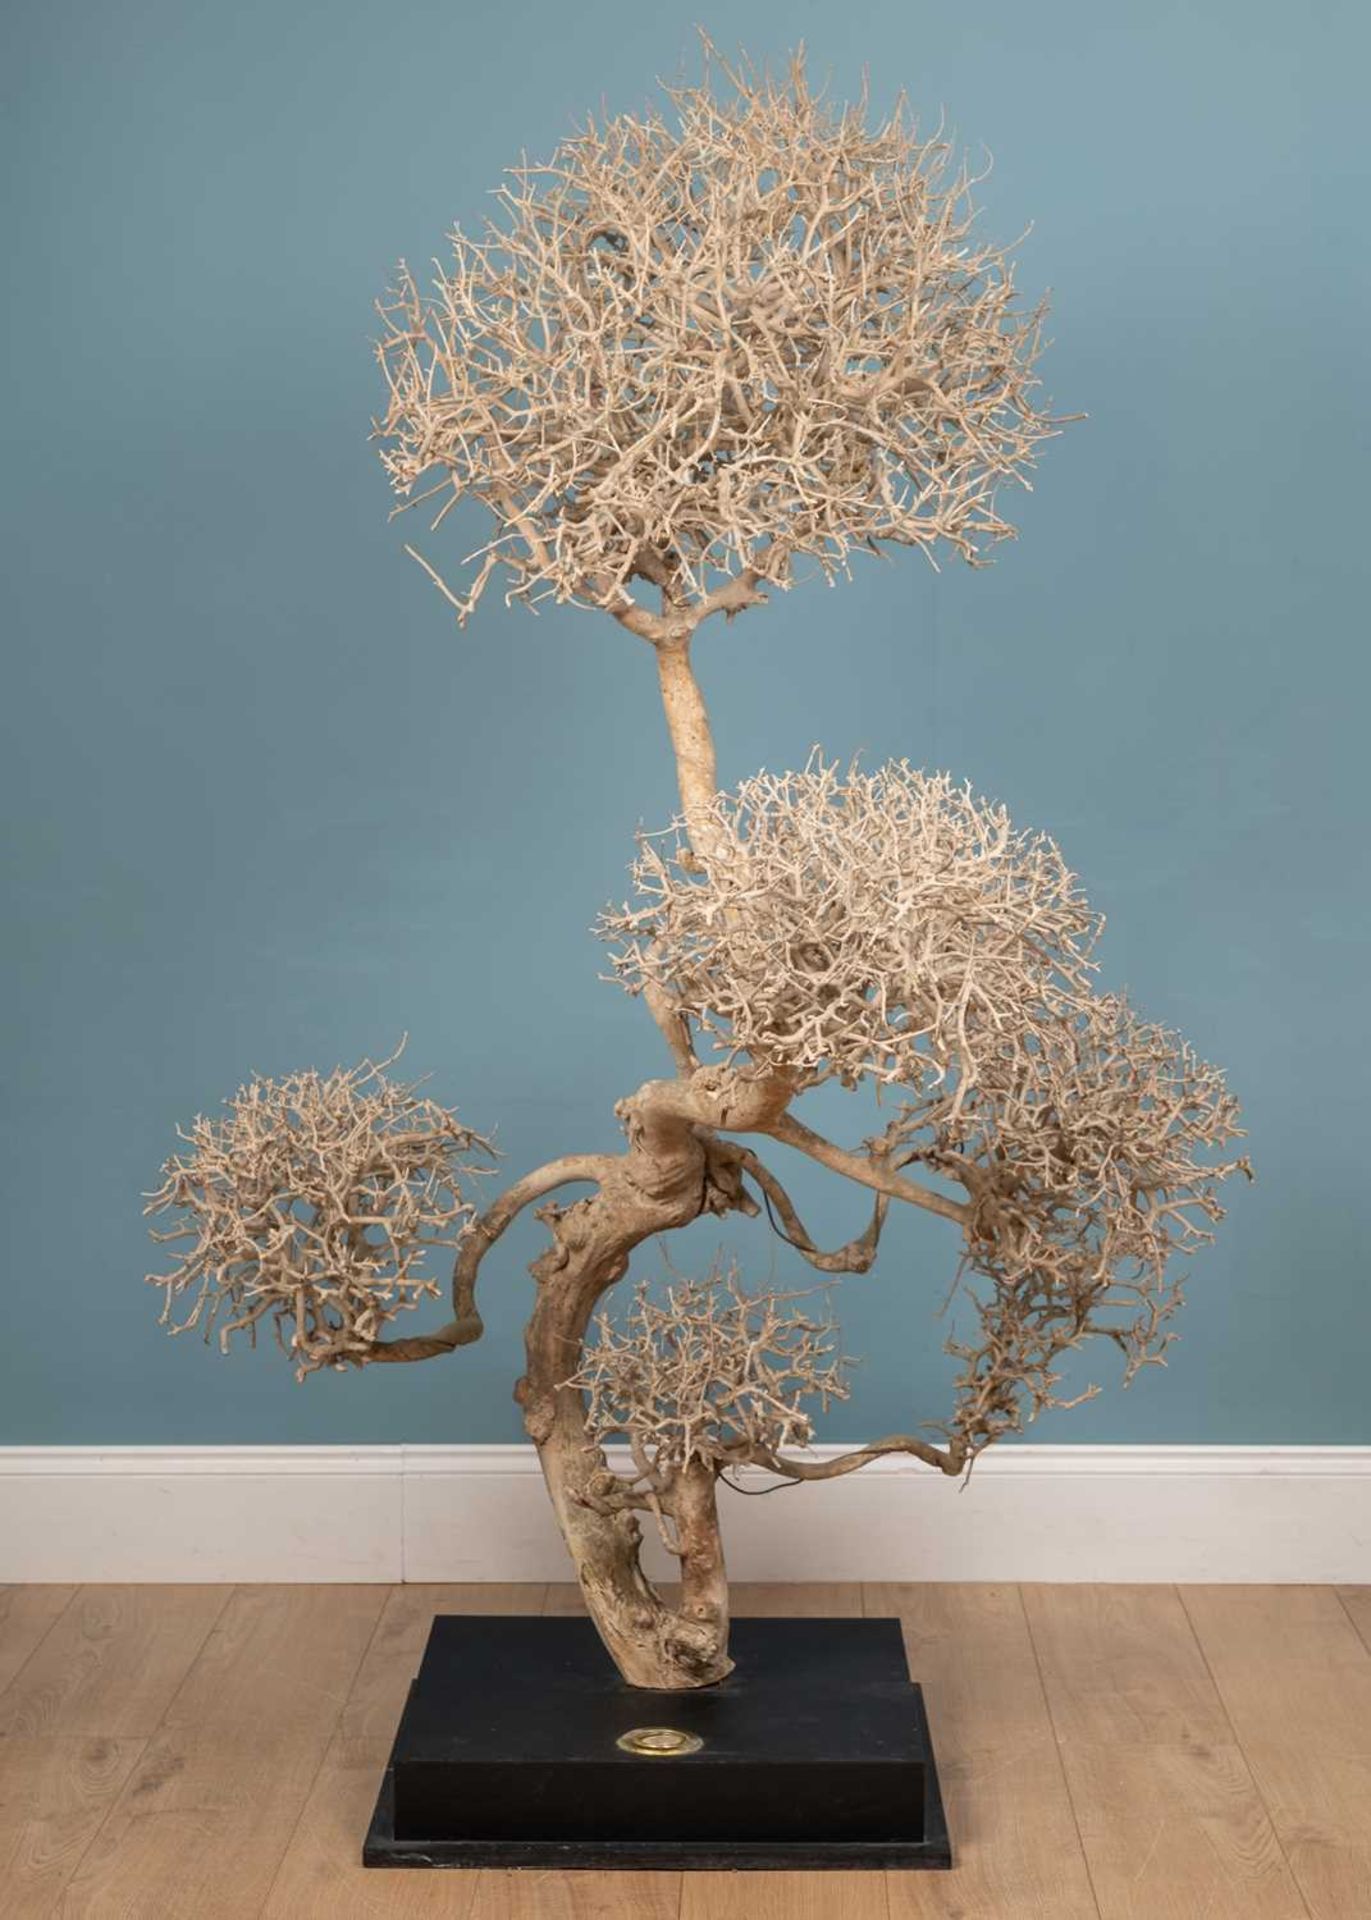 A decorative tree ornament